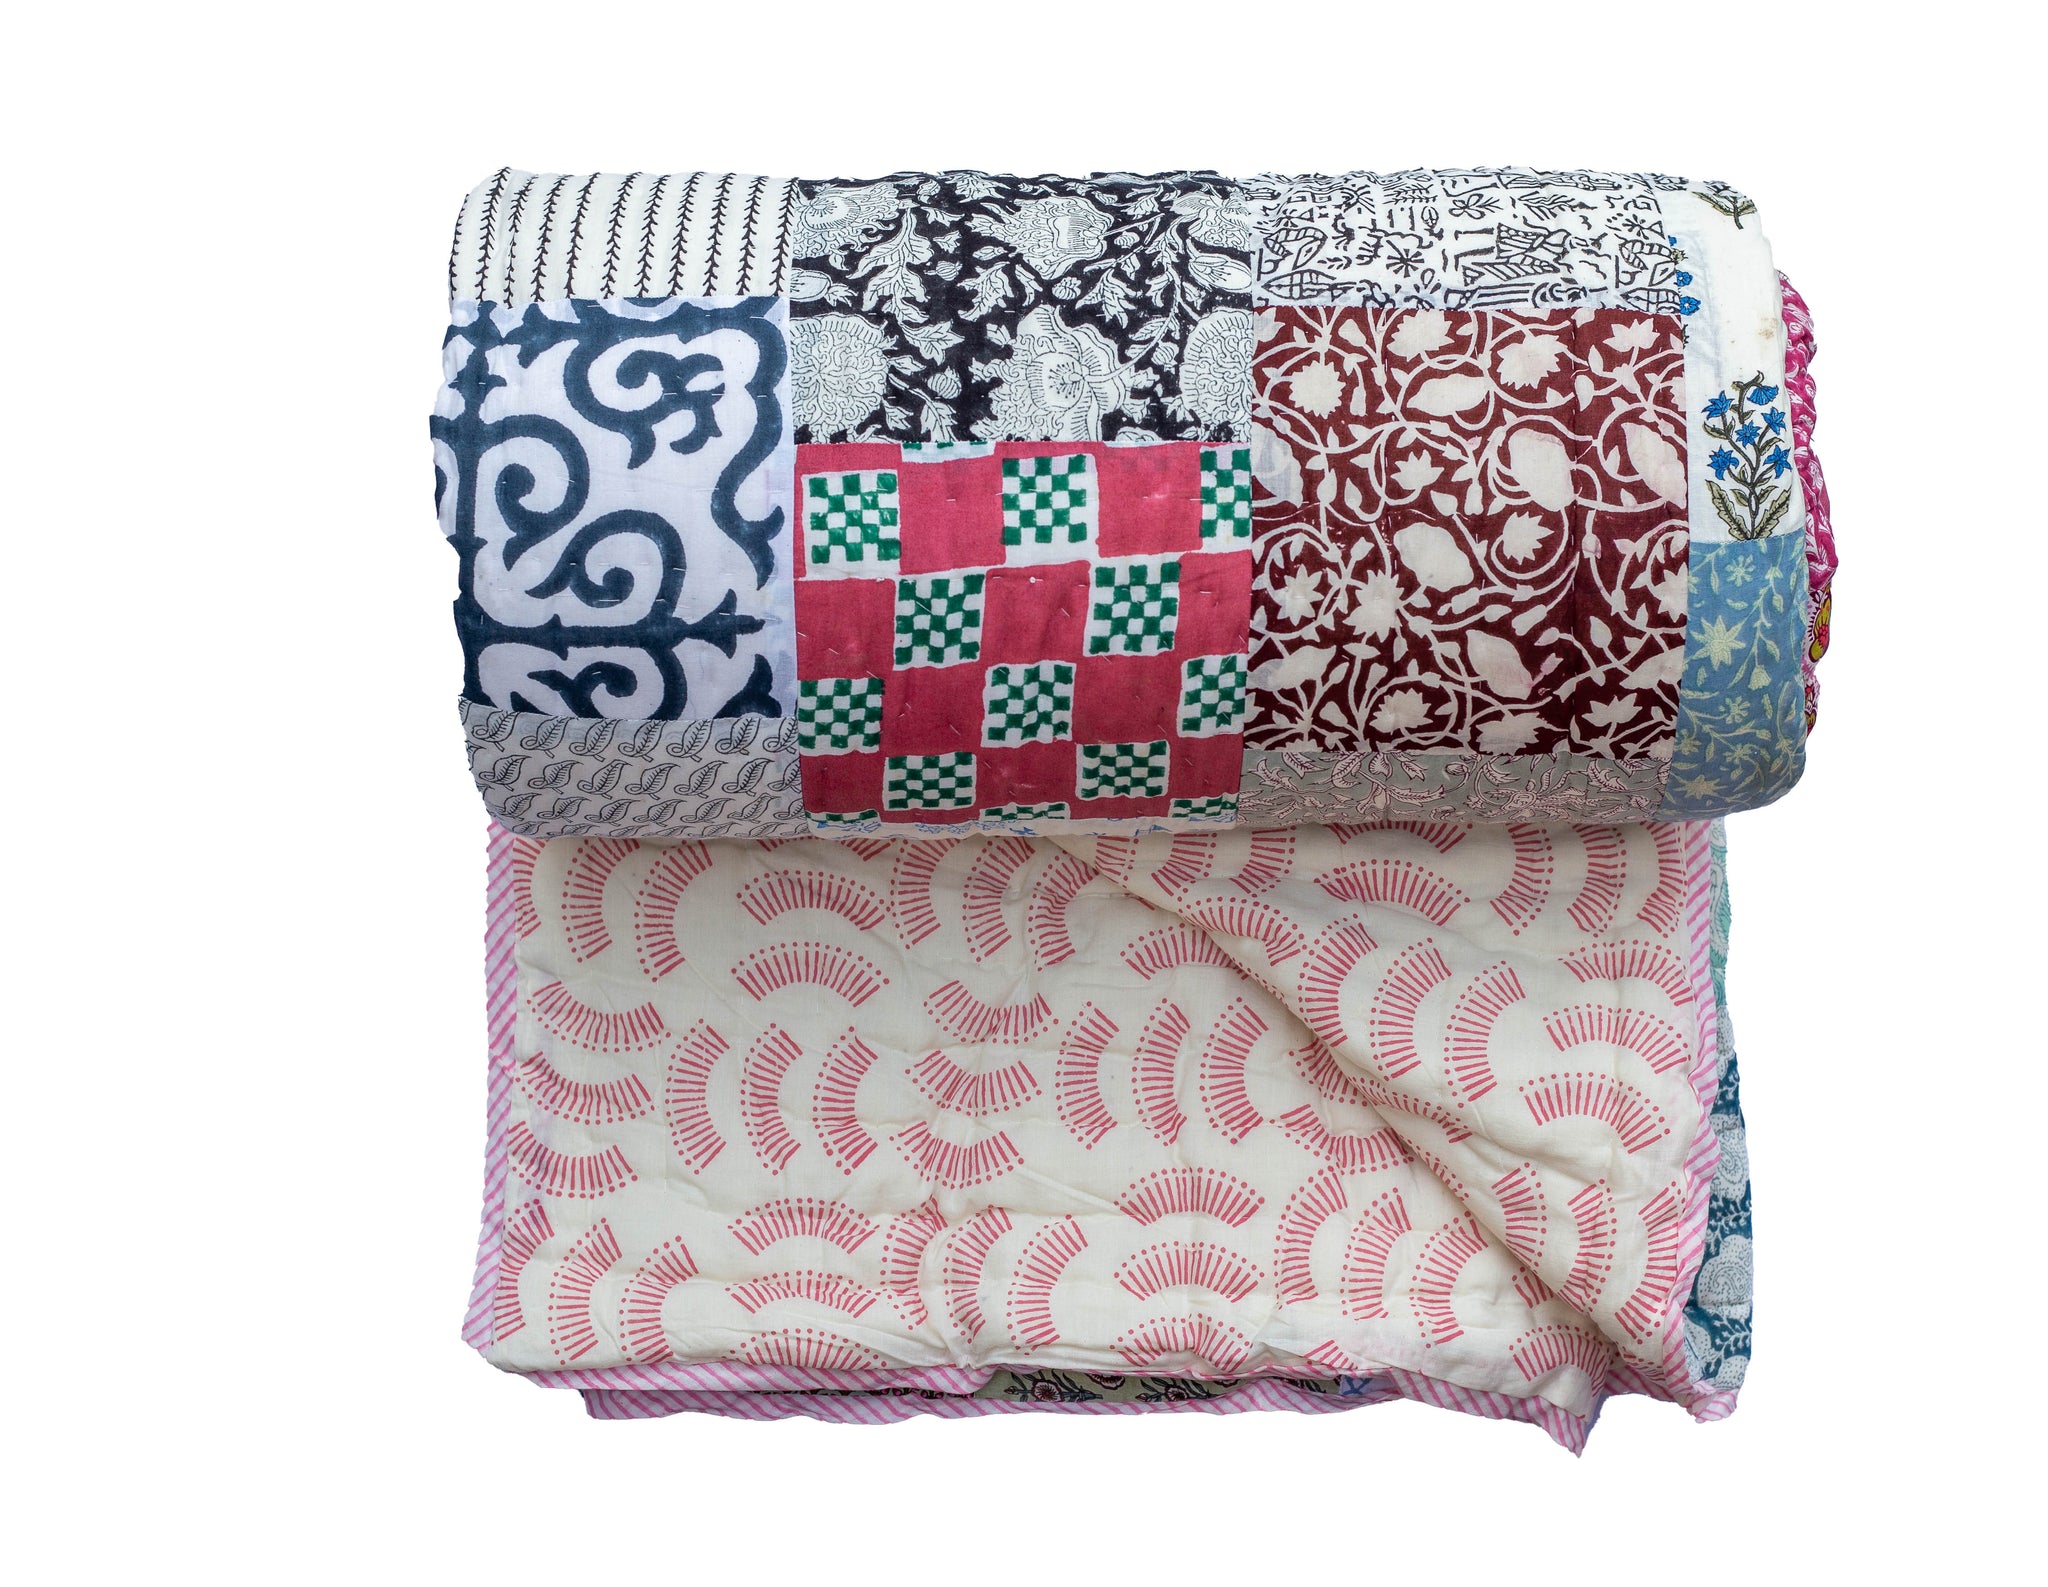 Roysha 2022 Patchwork Queen Quilt , Handmade, Hand Block printed Quilt, Jaipuri Quilt, Hand Quilted, Colourful Patchwork, QPW-334